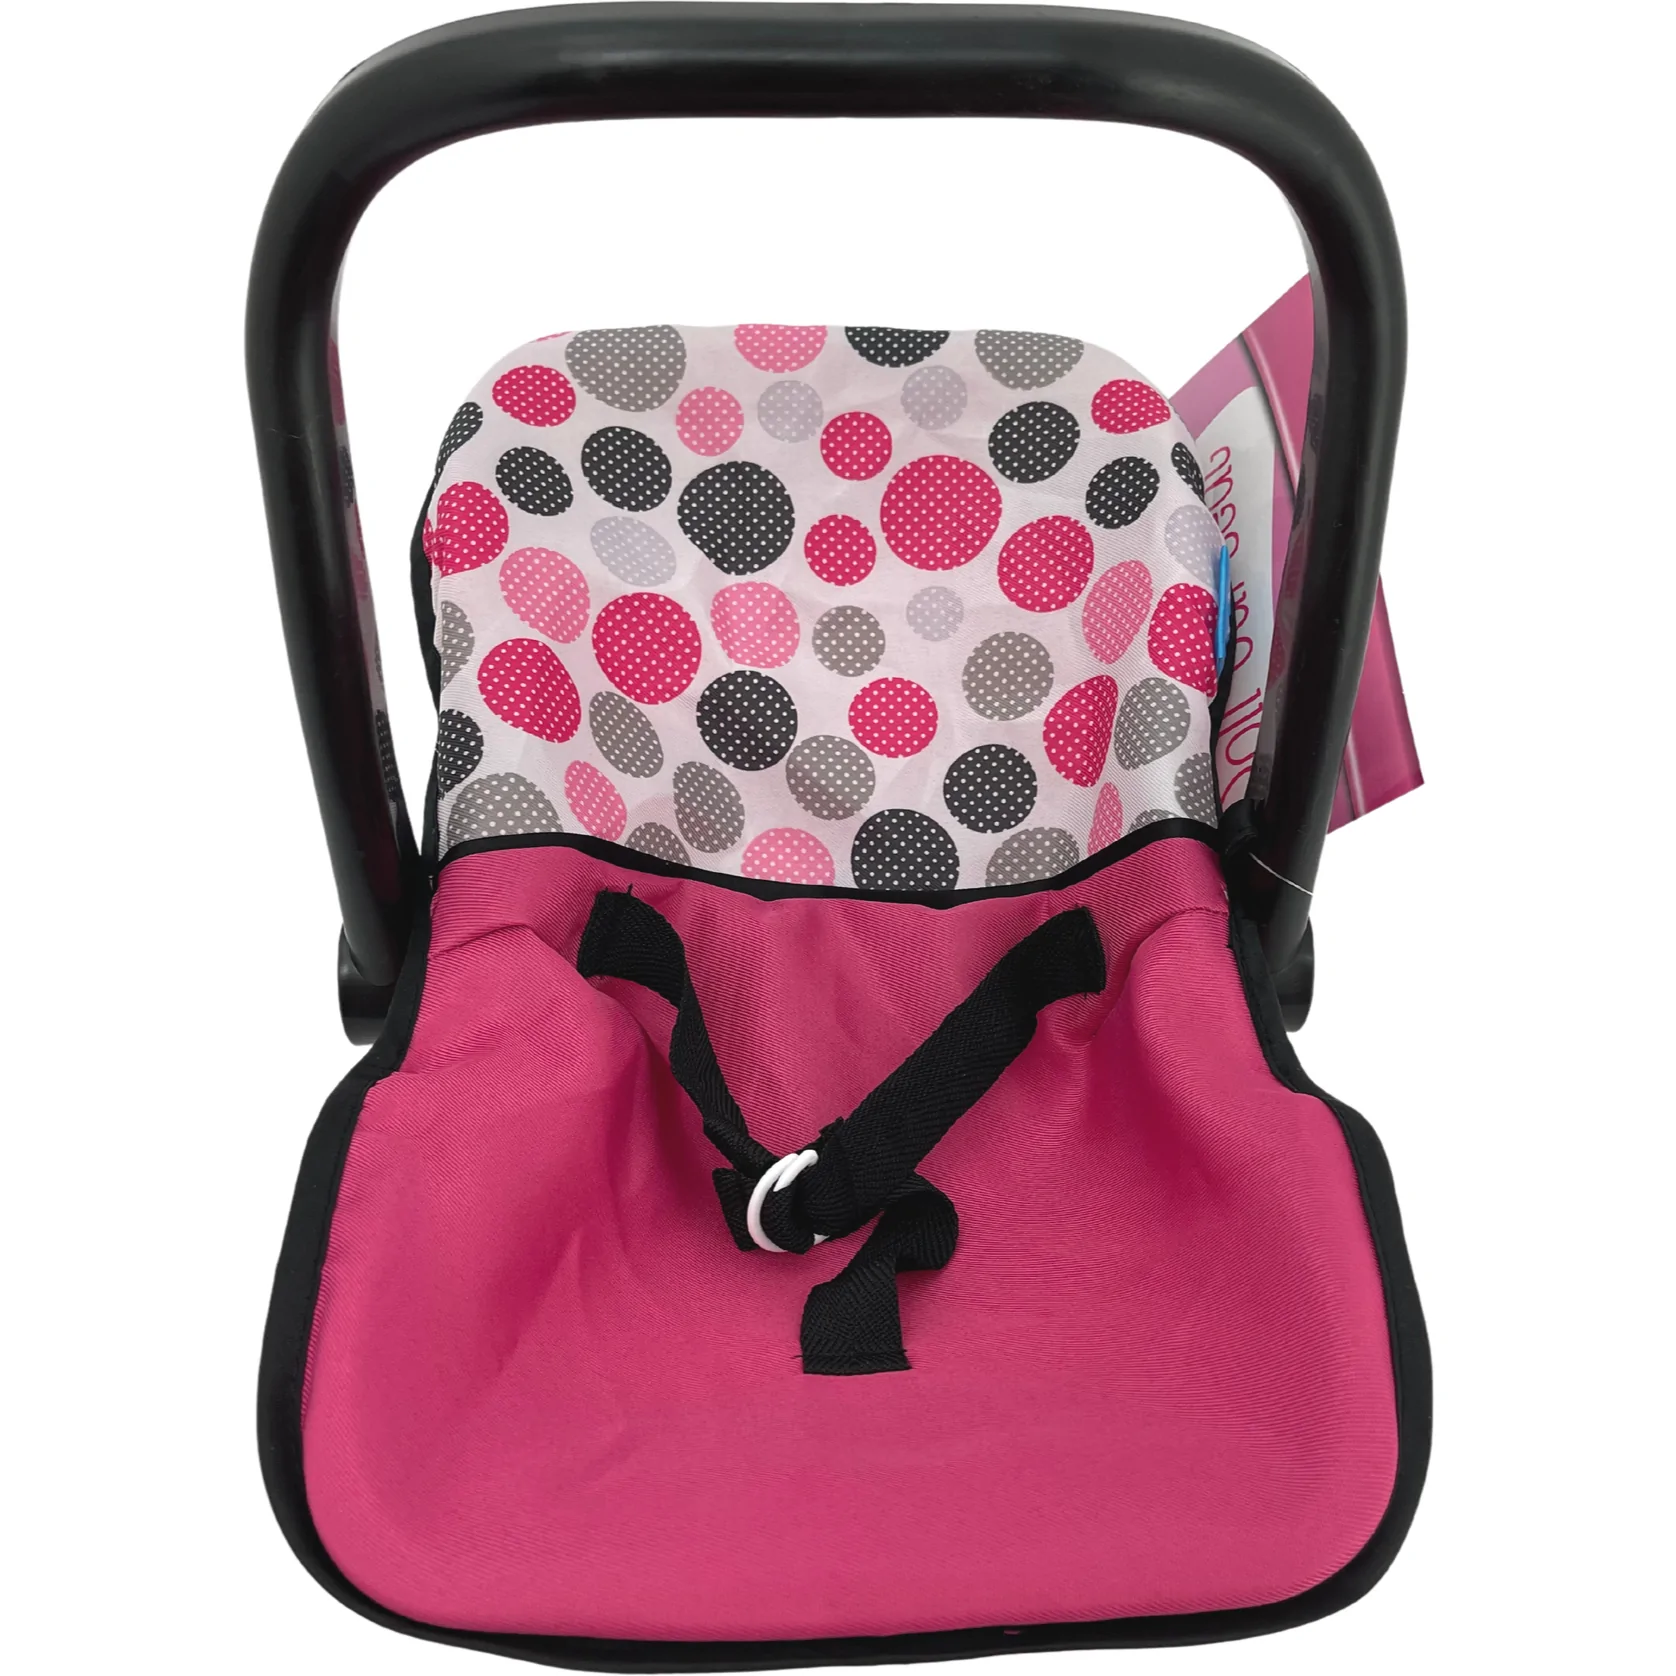 Hauck Doll Car Seat / Pretend Play / Pink, Black & Grey / Doll Accessories